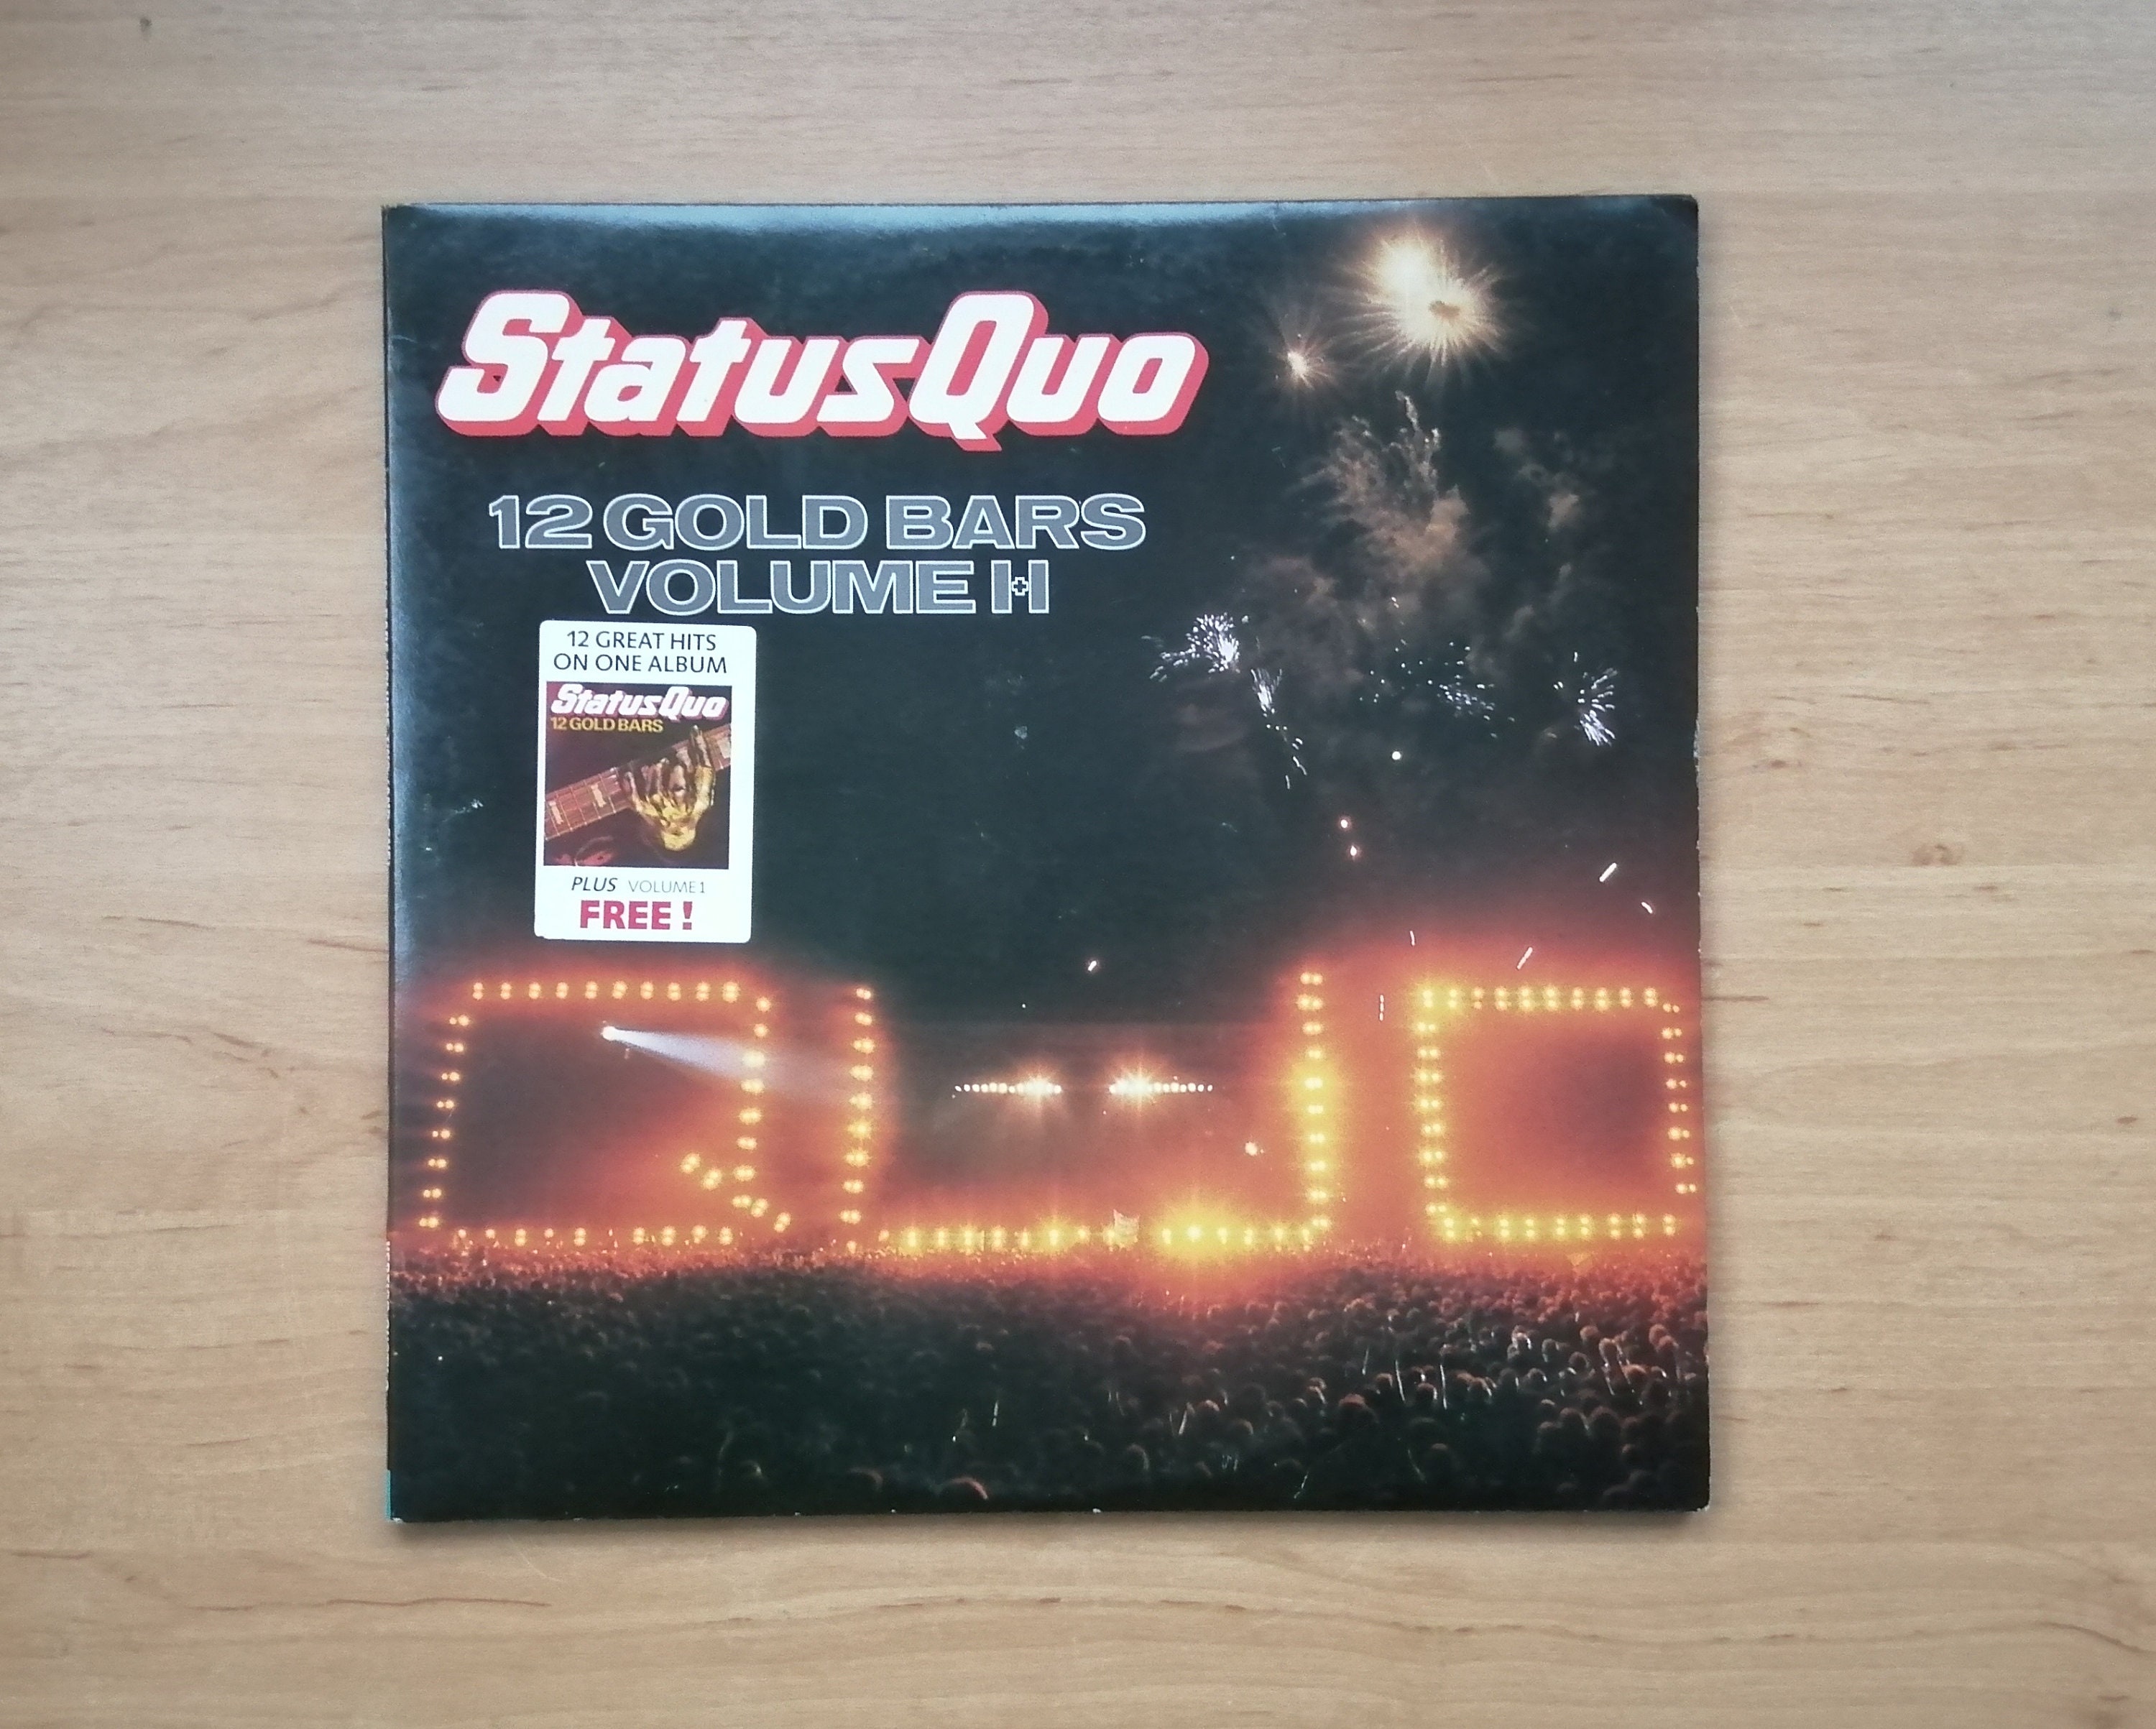 loyalitet mikro Sommerhus Status Quo Vinyl Record 12 Gold Bars I & II Double Album - Etsy Sweden